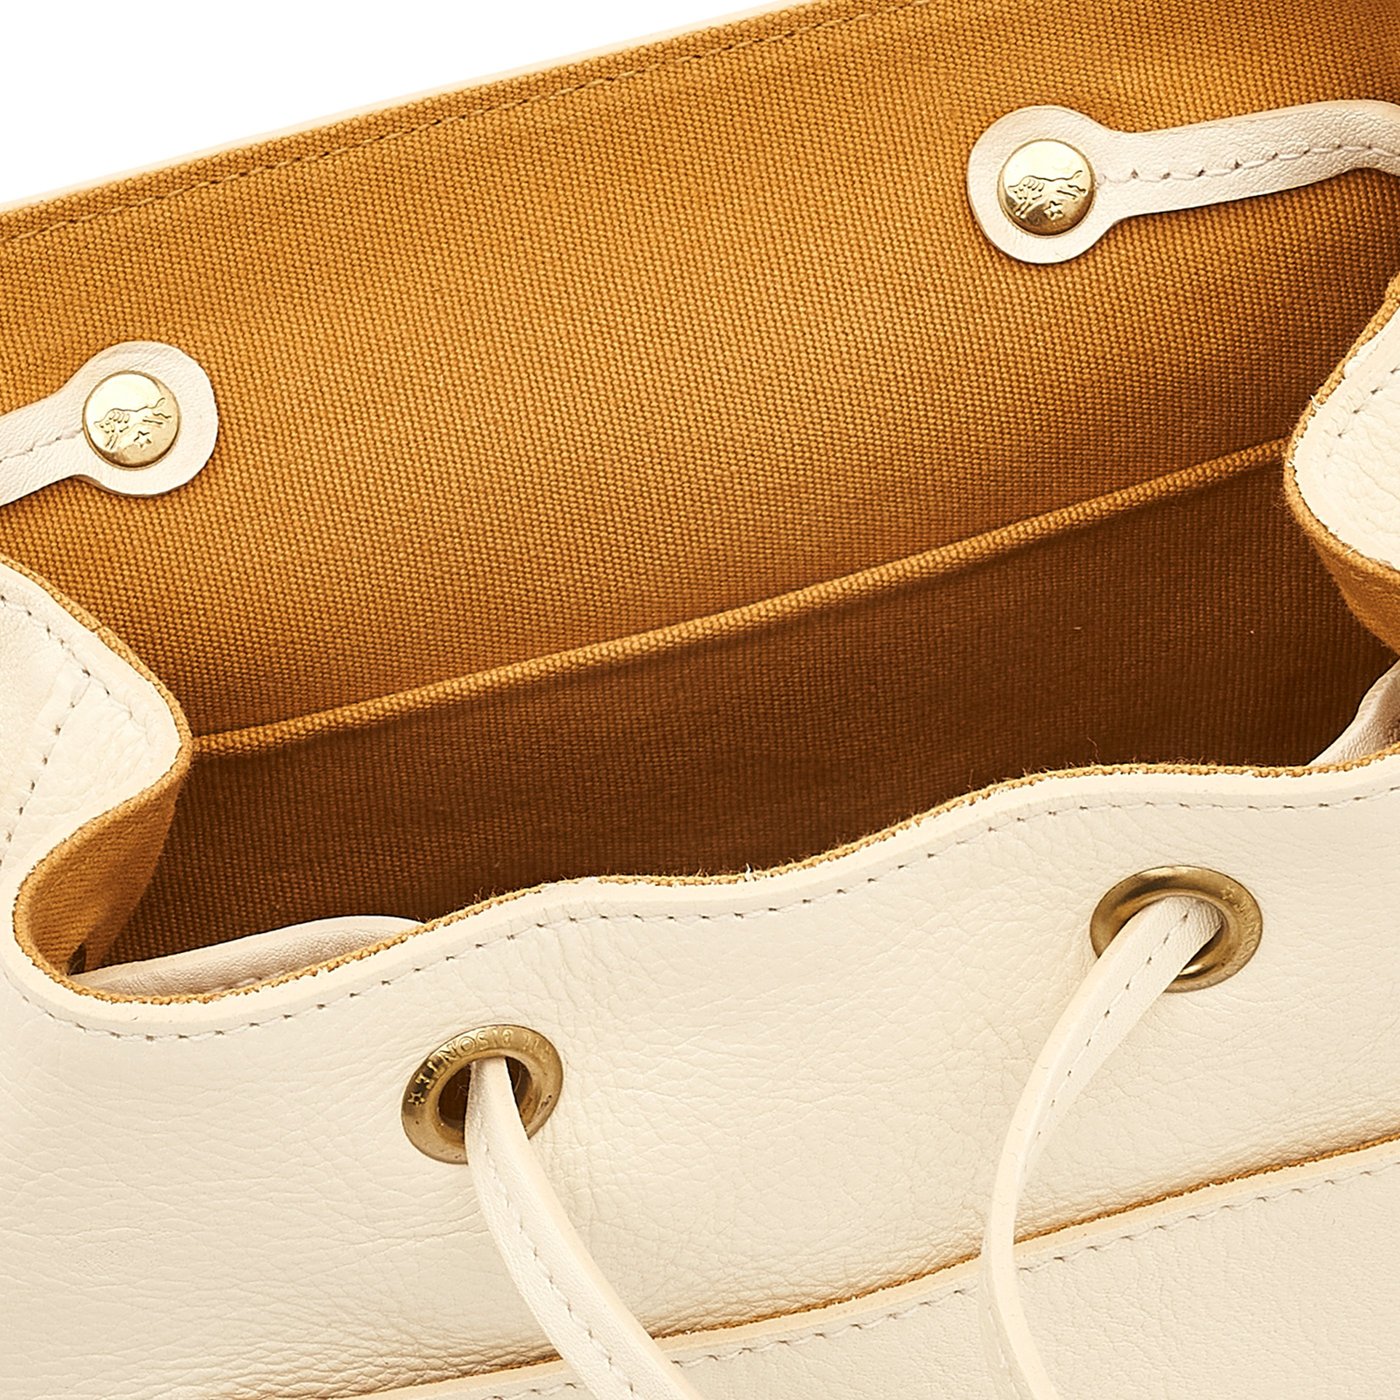 Mezzomonte | Women's backpack in leather color milk